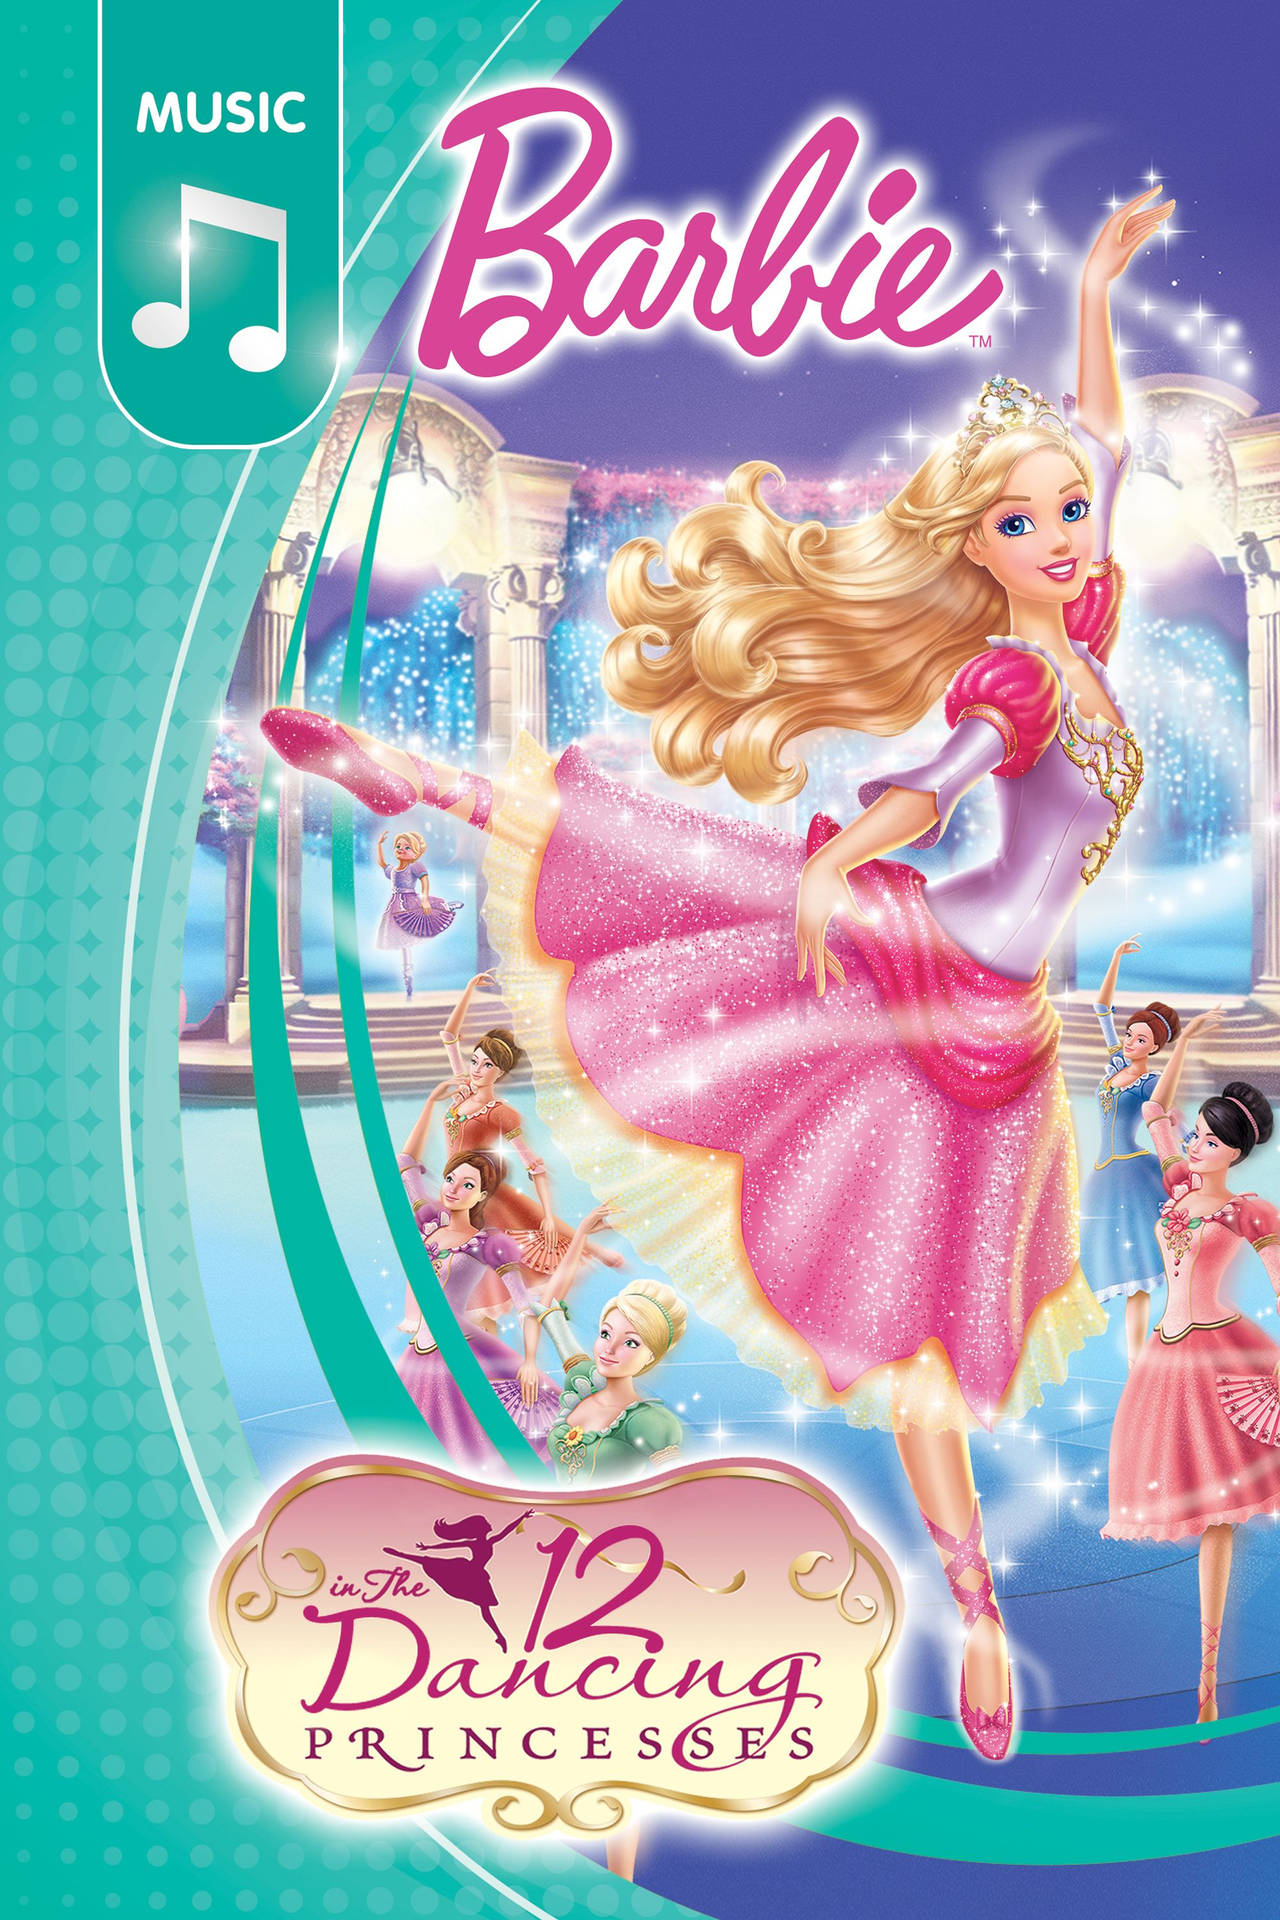 Barbie Princess Dancing Princesses Music Cover Background